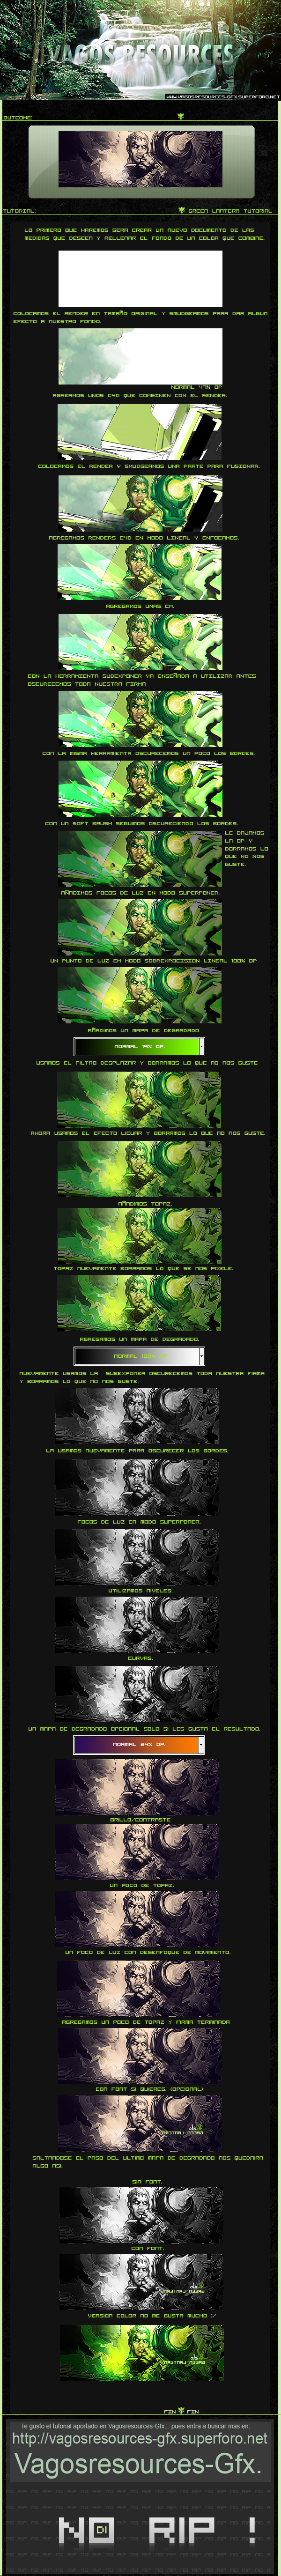 Green_lantern_tutorial_by_relotidean.png